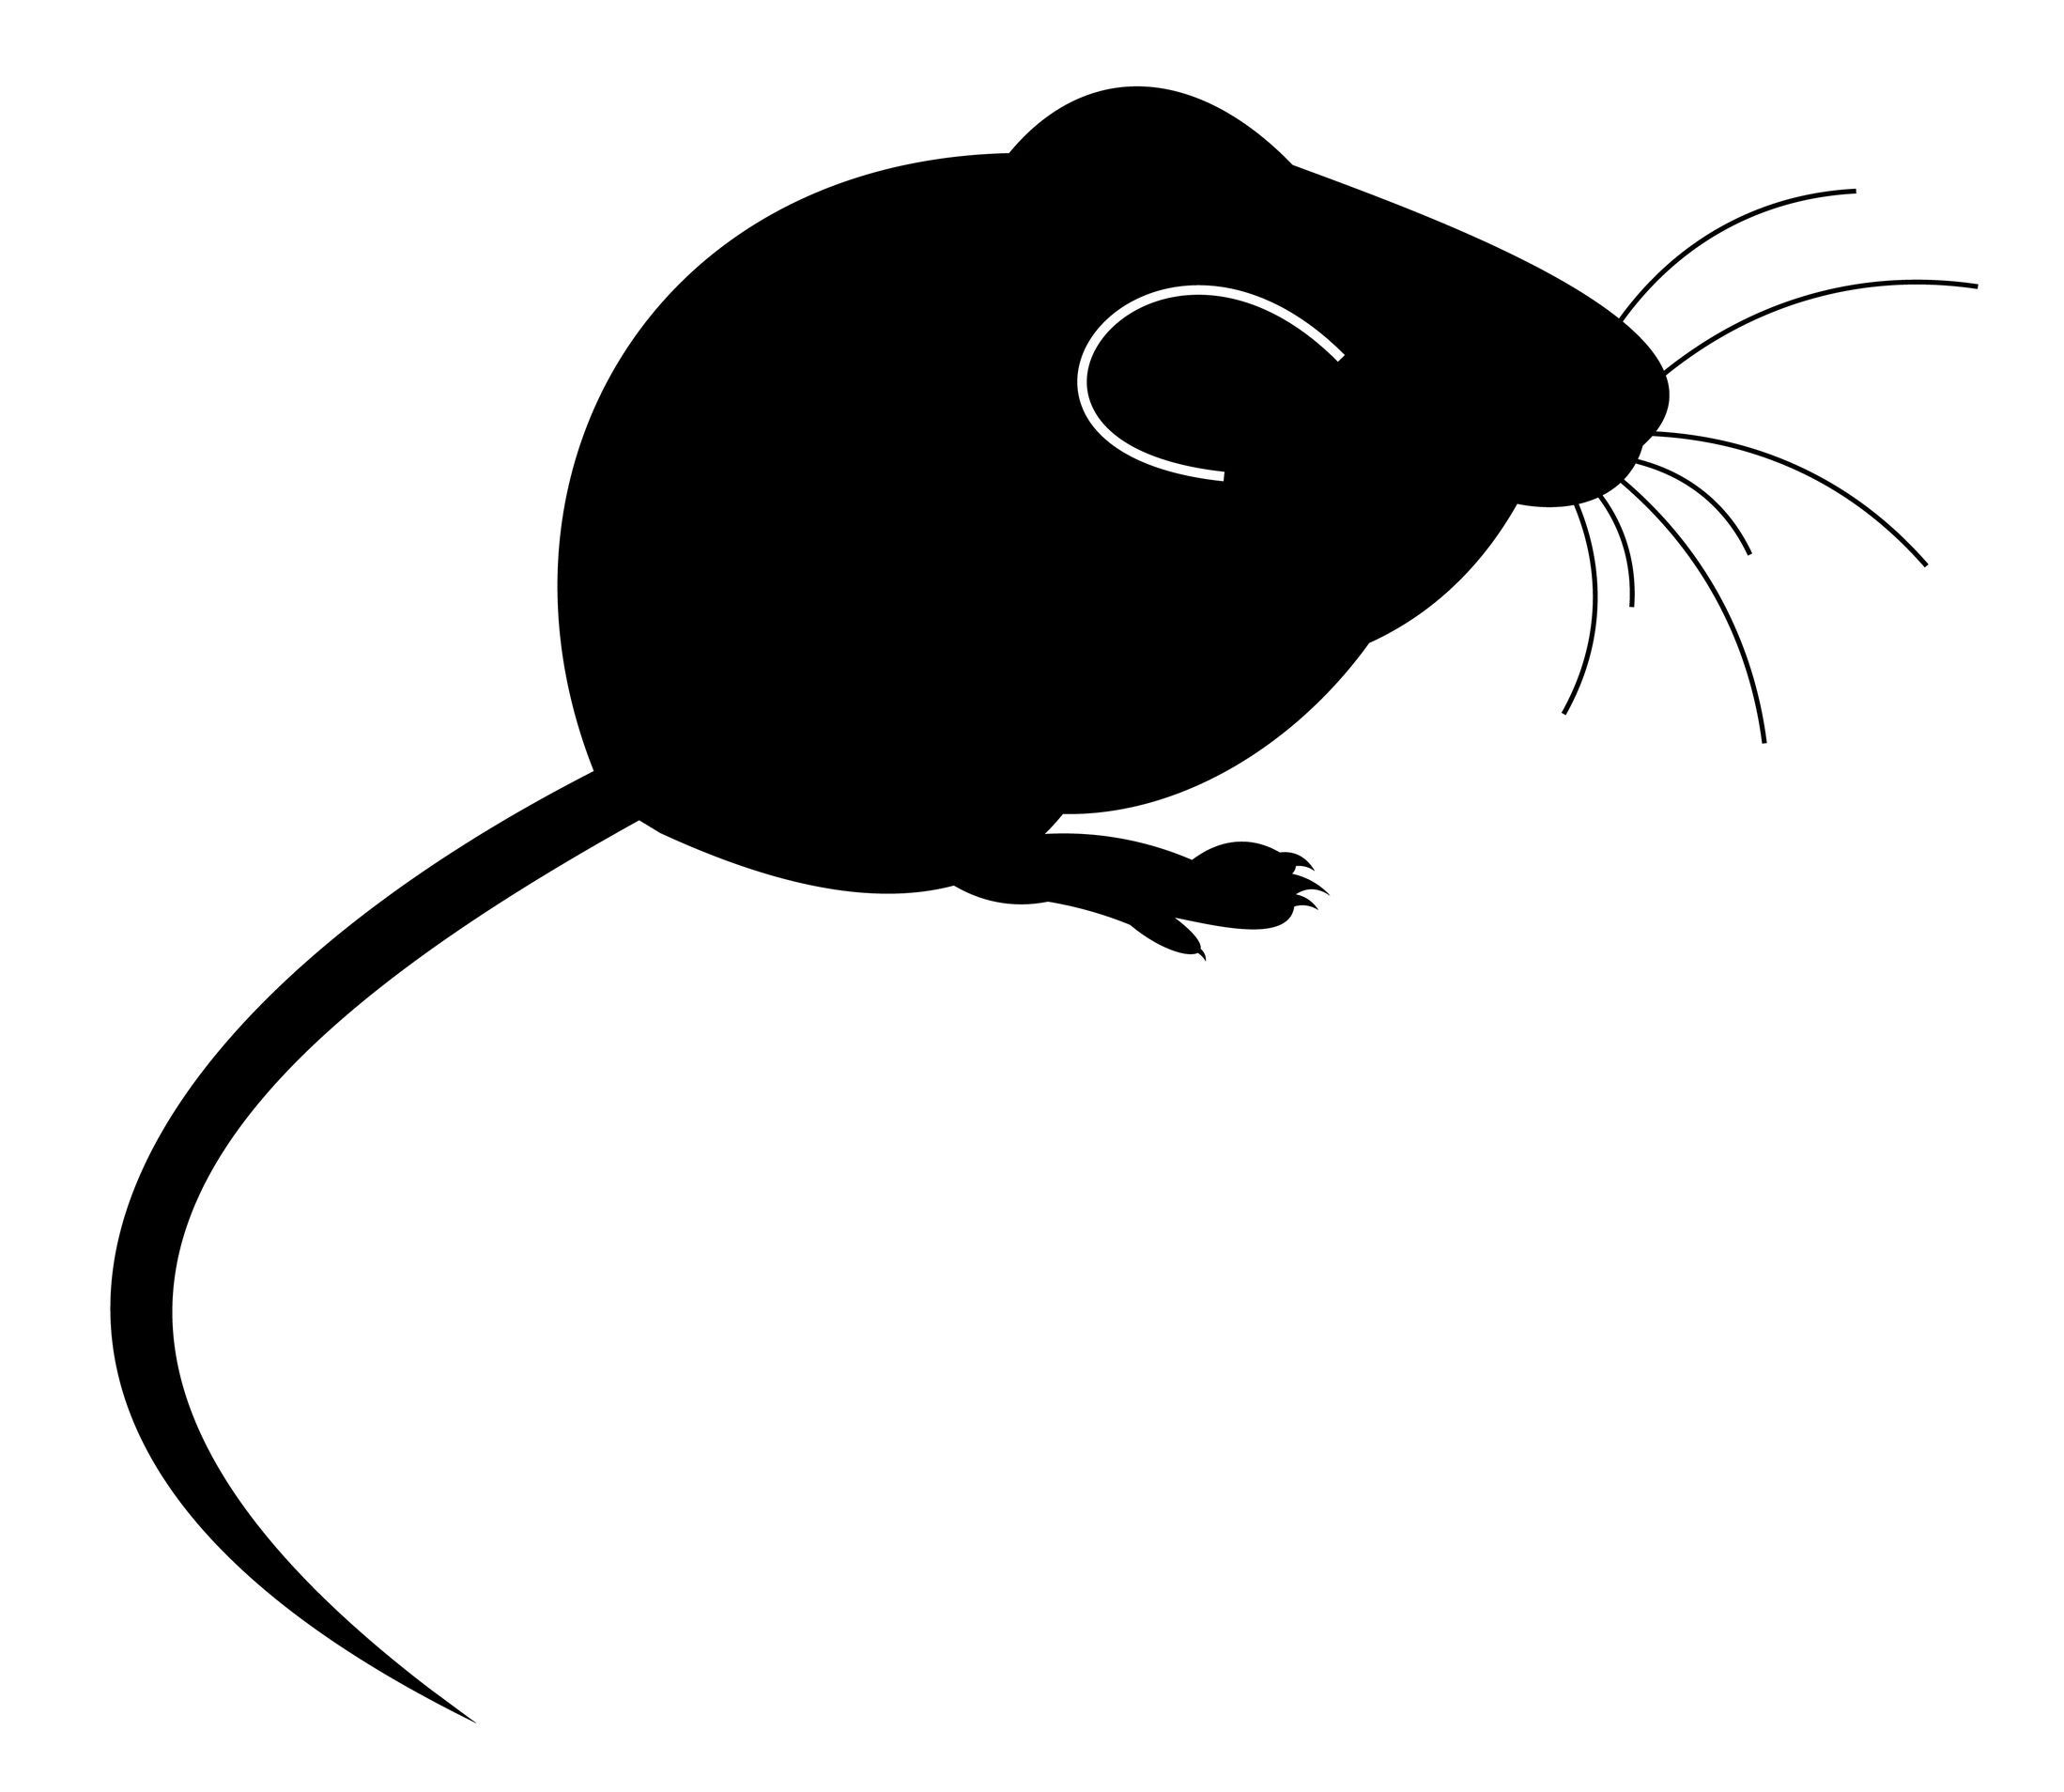 Мышь силуэт на прозрачном фоне